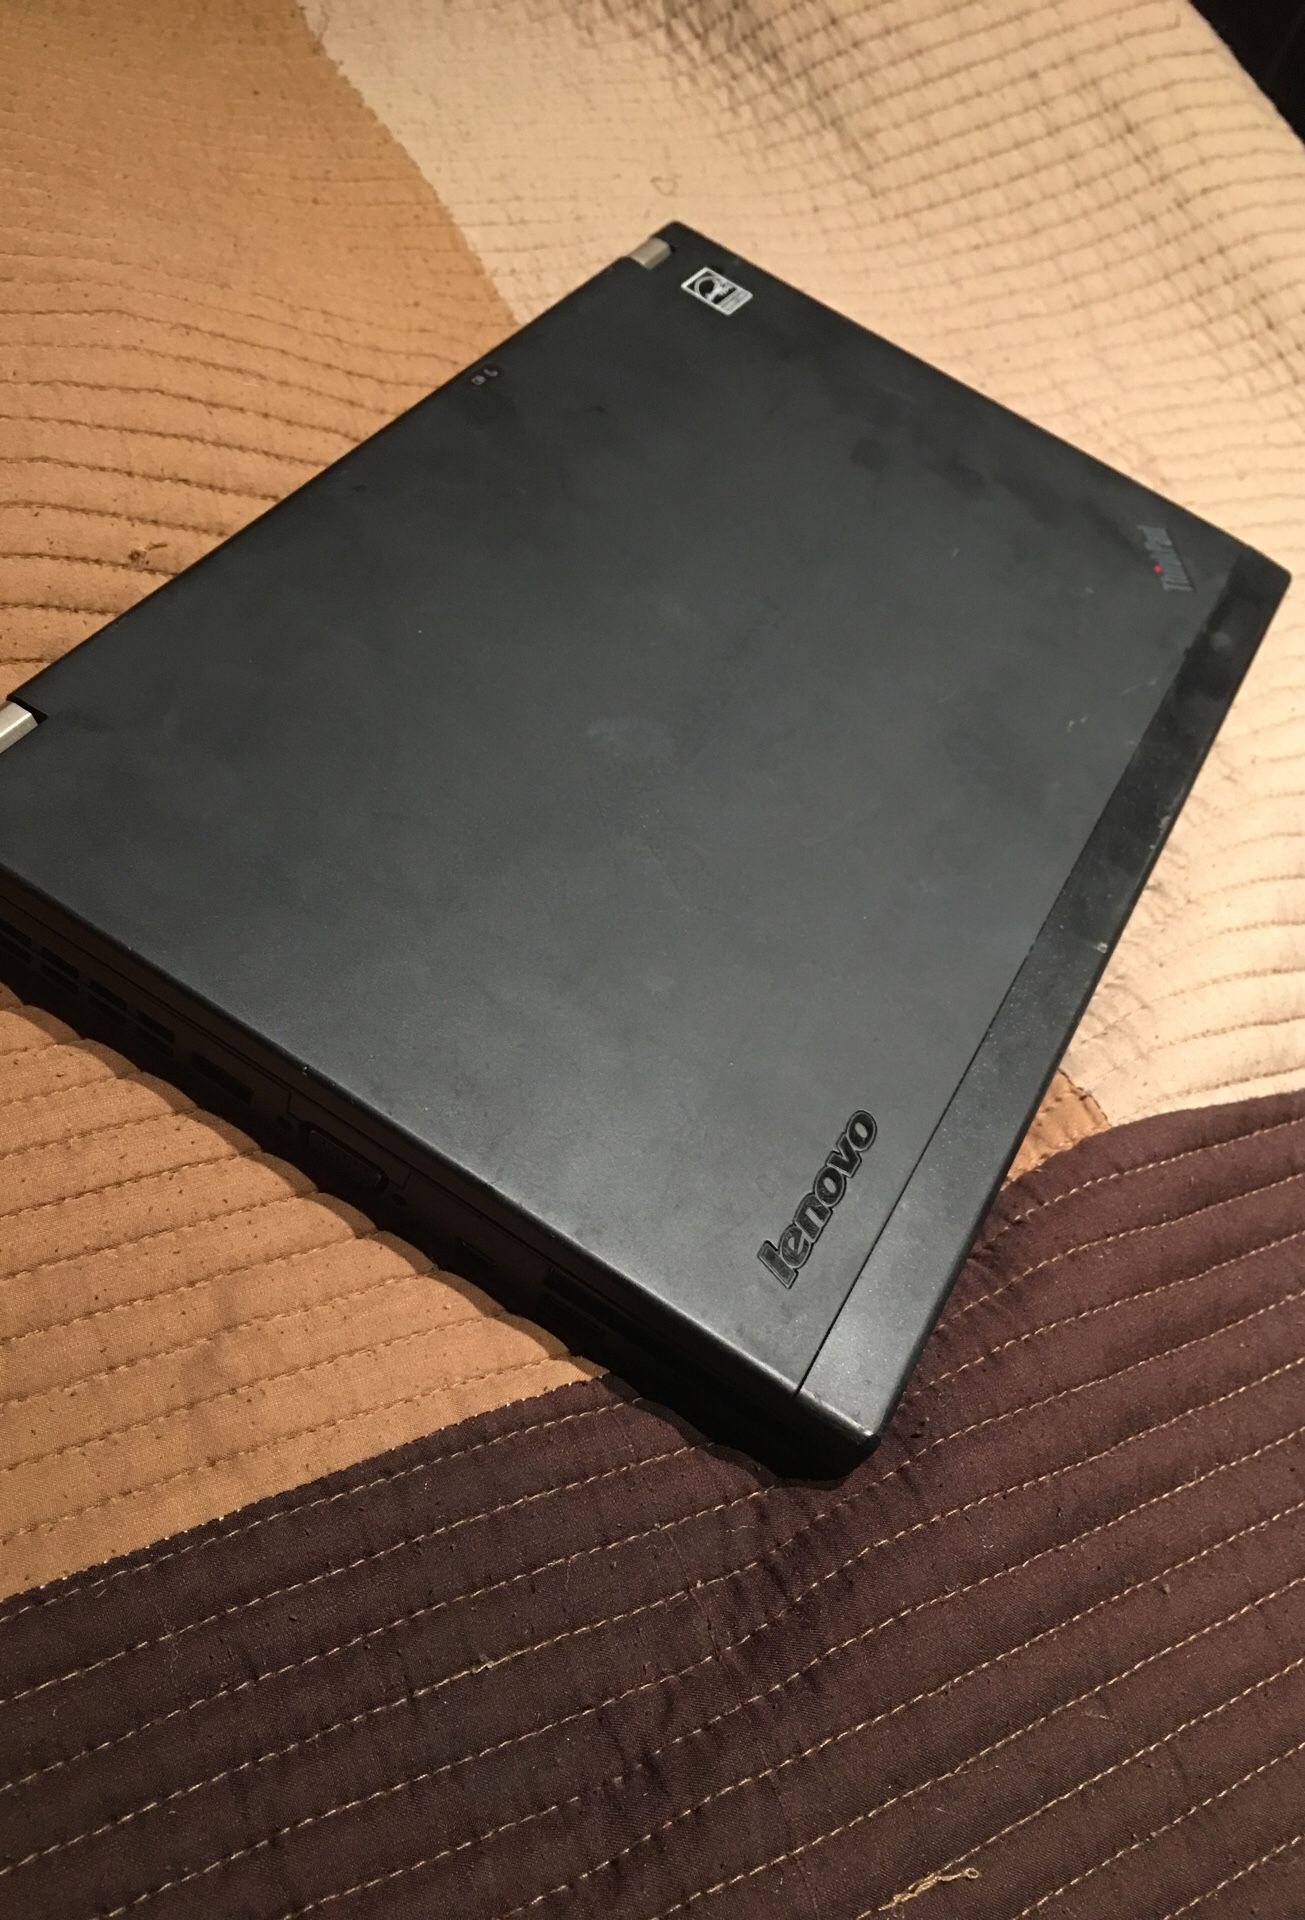 Lenovo thinkpad x230 laptop